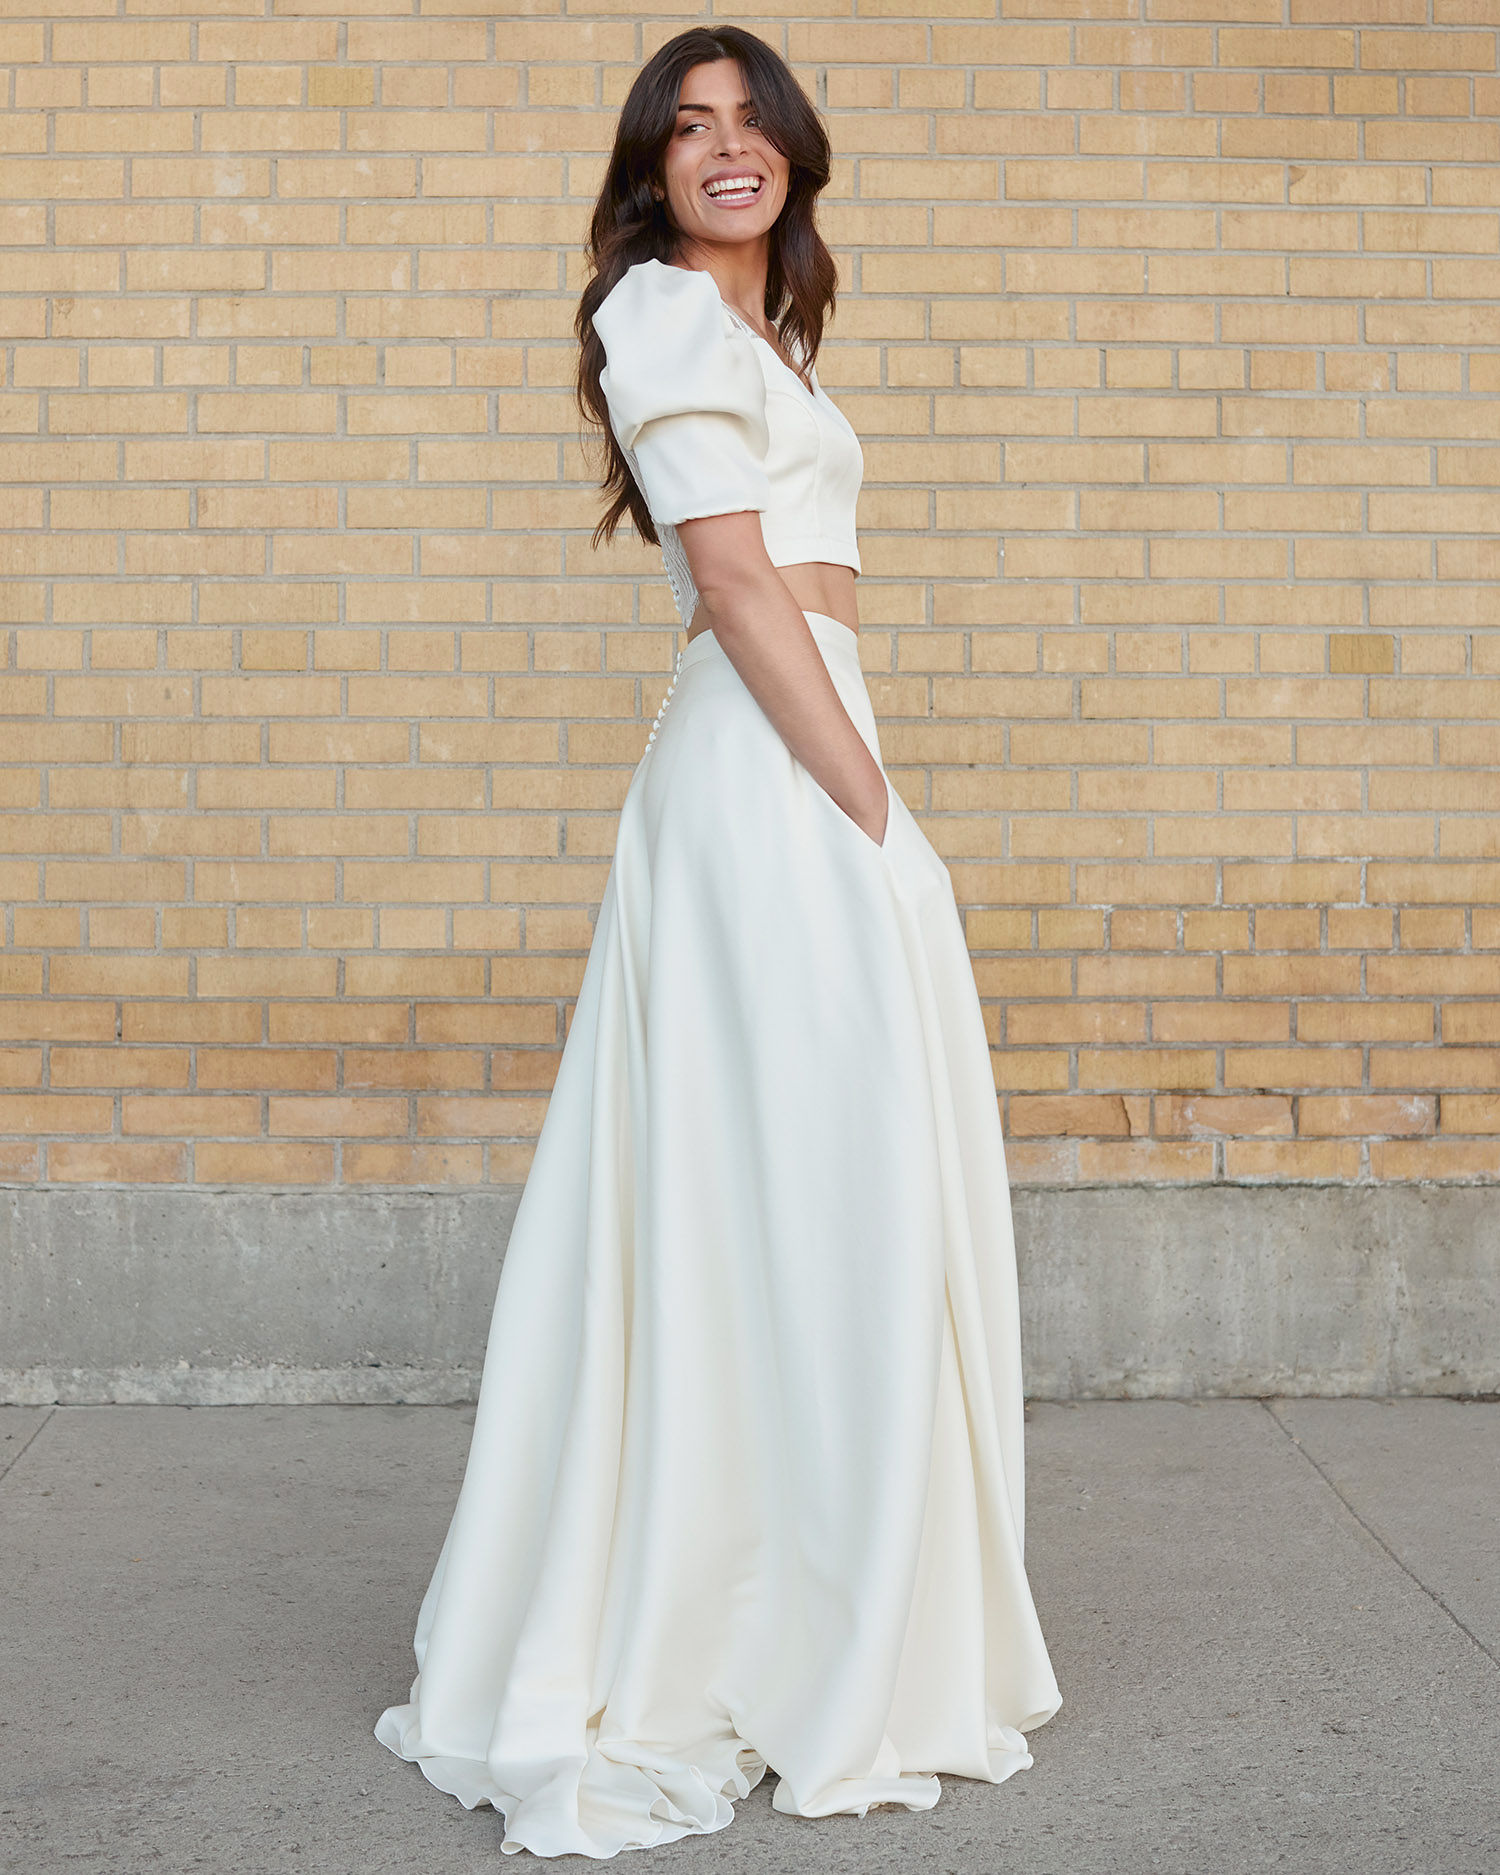 Aurélia Hoang Collection 2022 - Robes de mariée - Blog Mariage Madame C